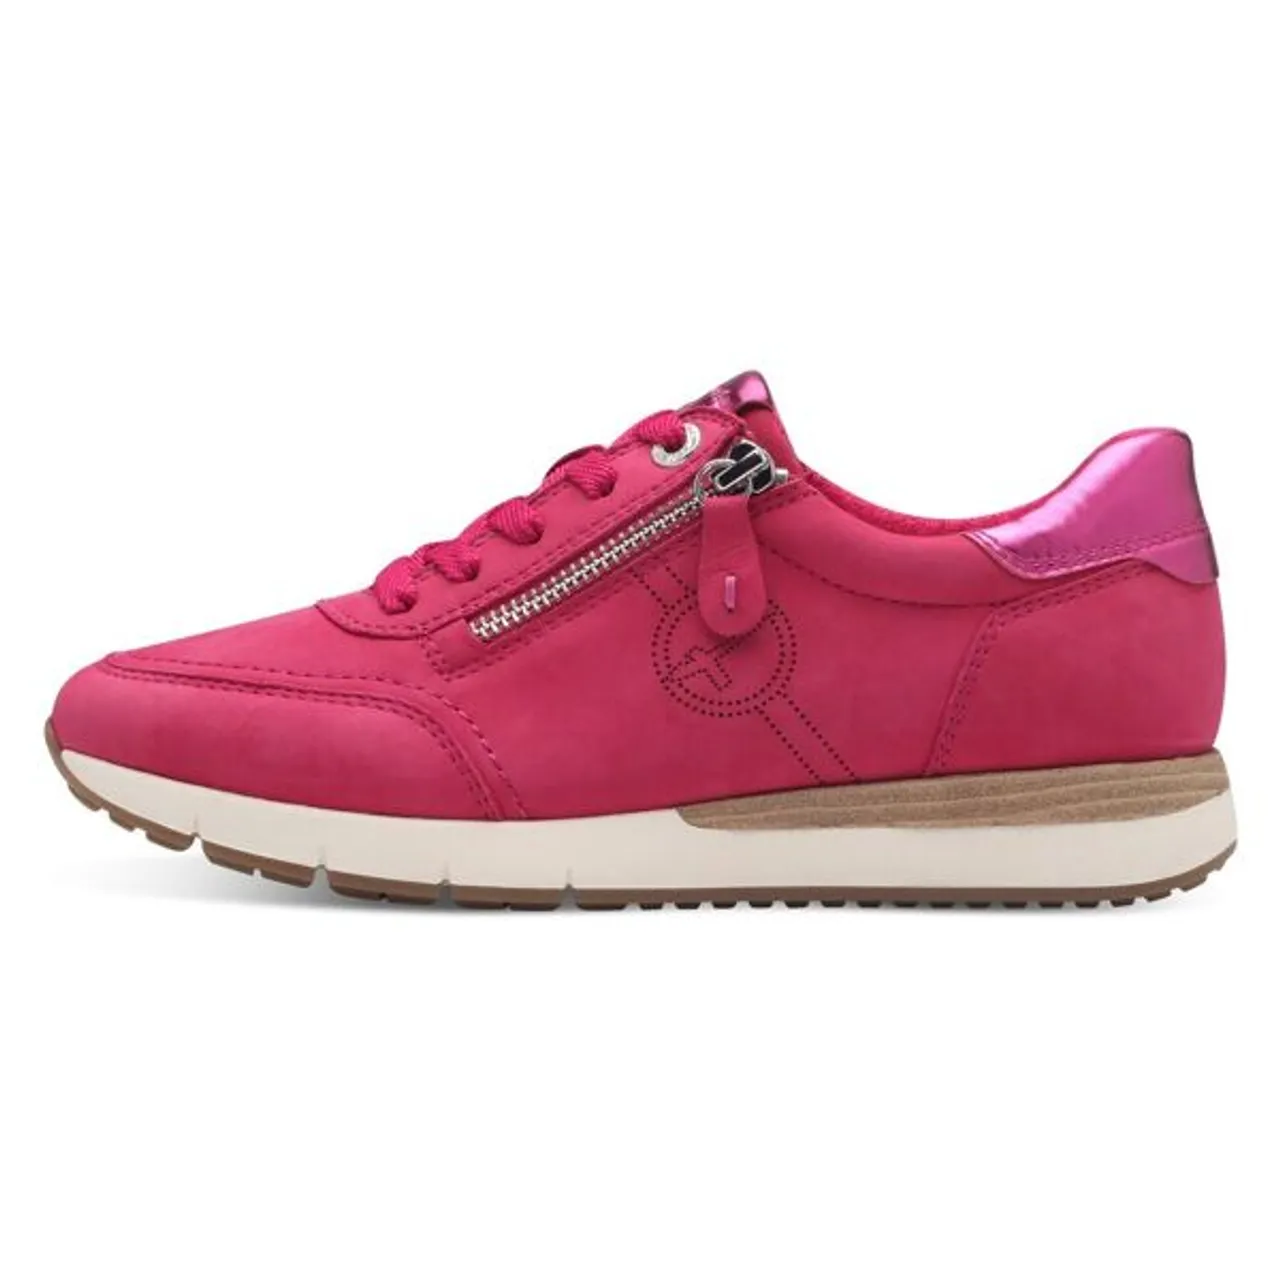 Sneaker TAMARIS COMFORT Gr. 37, pink (fuchsia) Damen Schuhe Sneaker